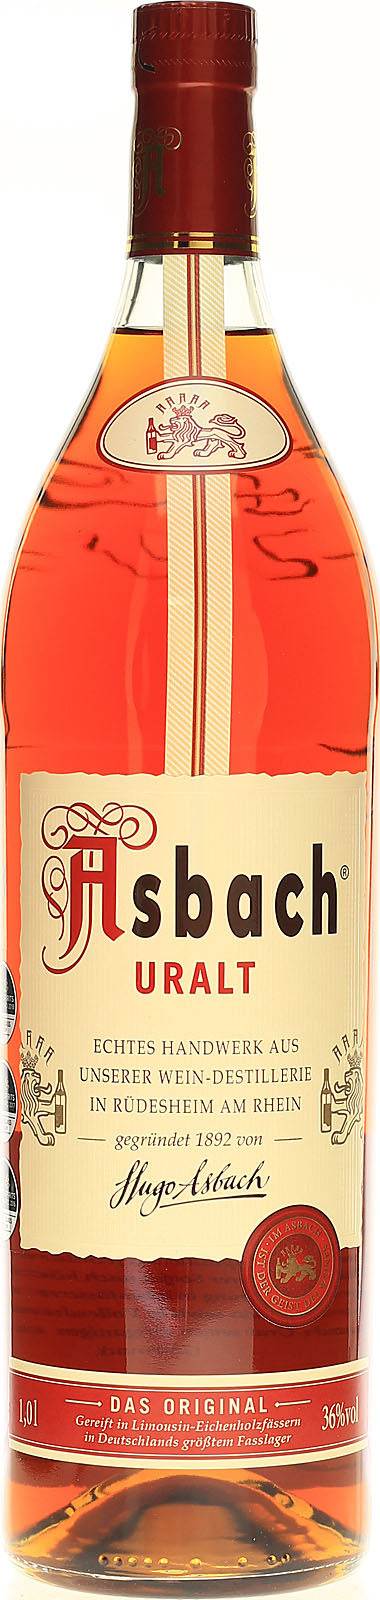 Uralt, Weinbrand Asbach deutscher